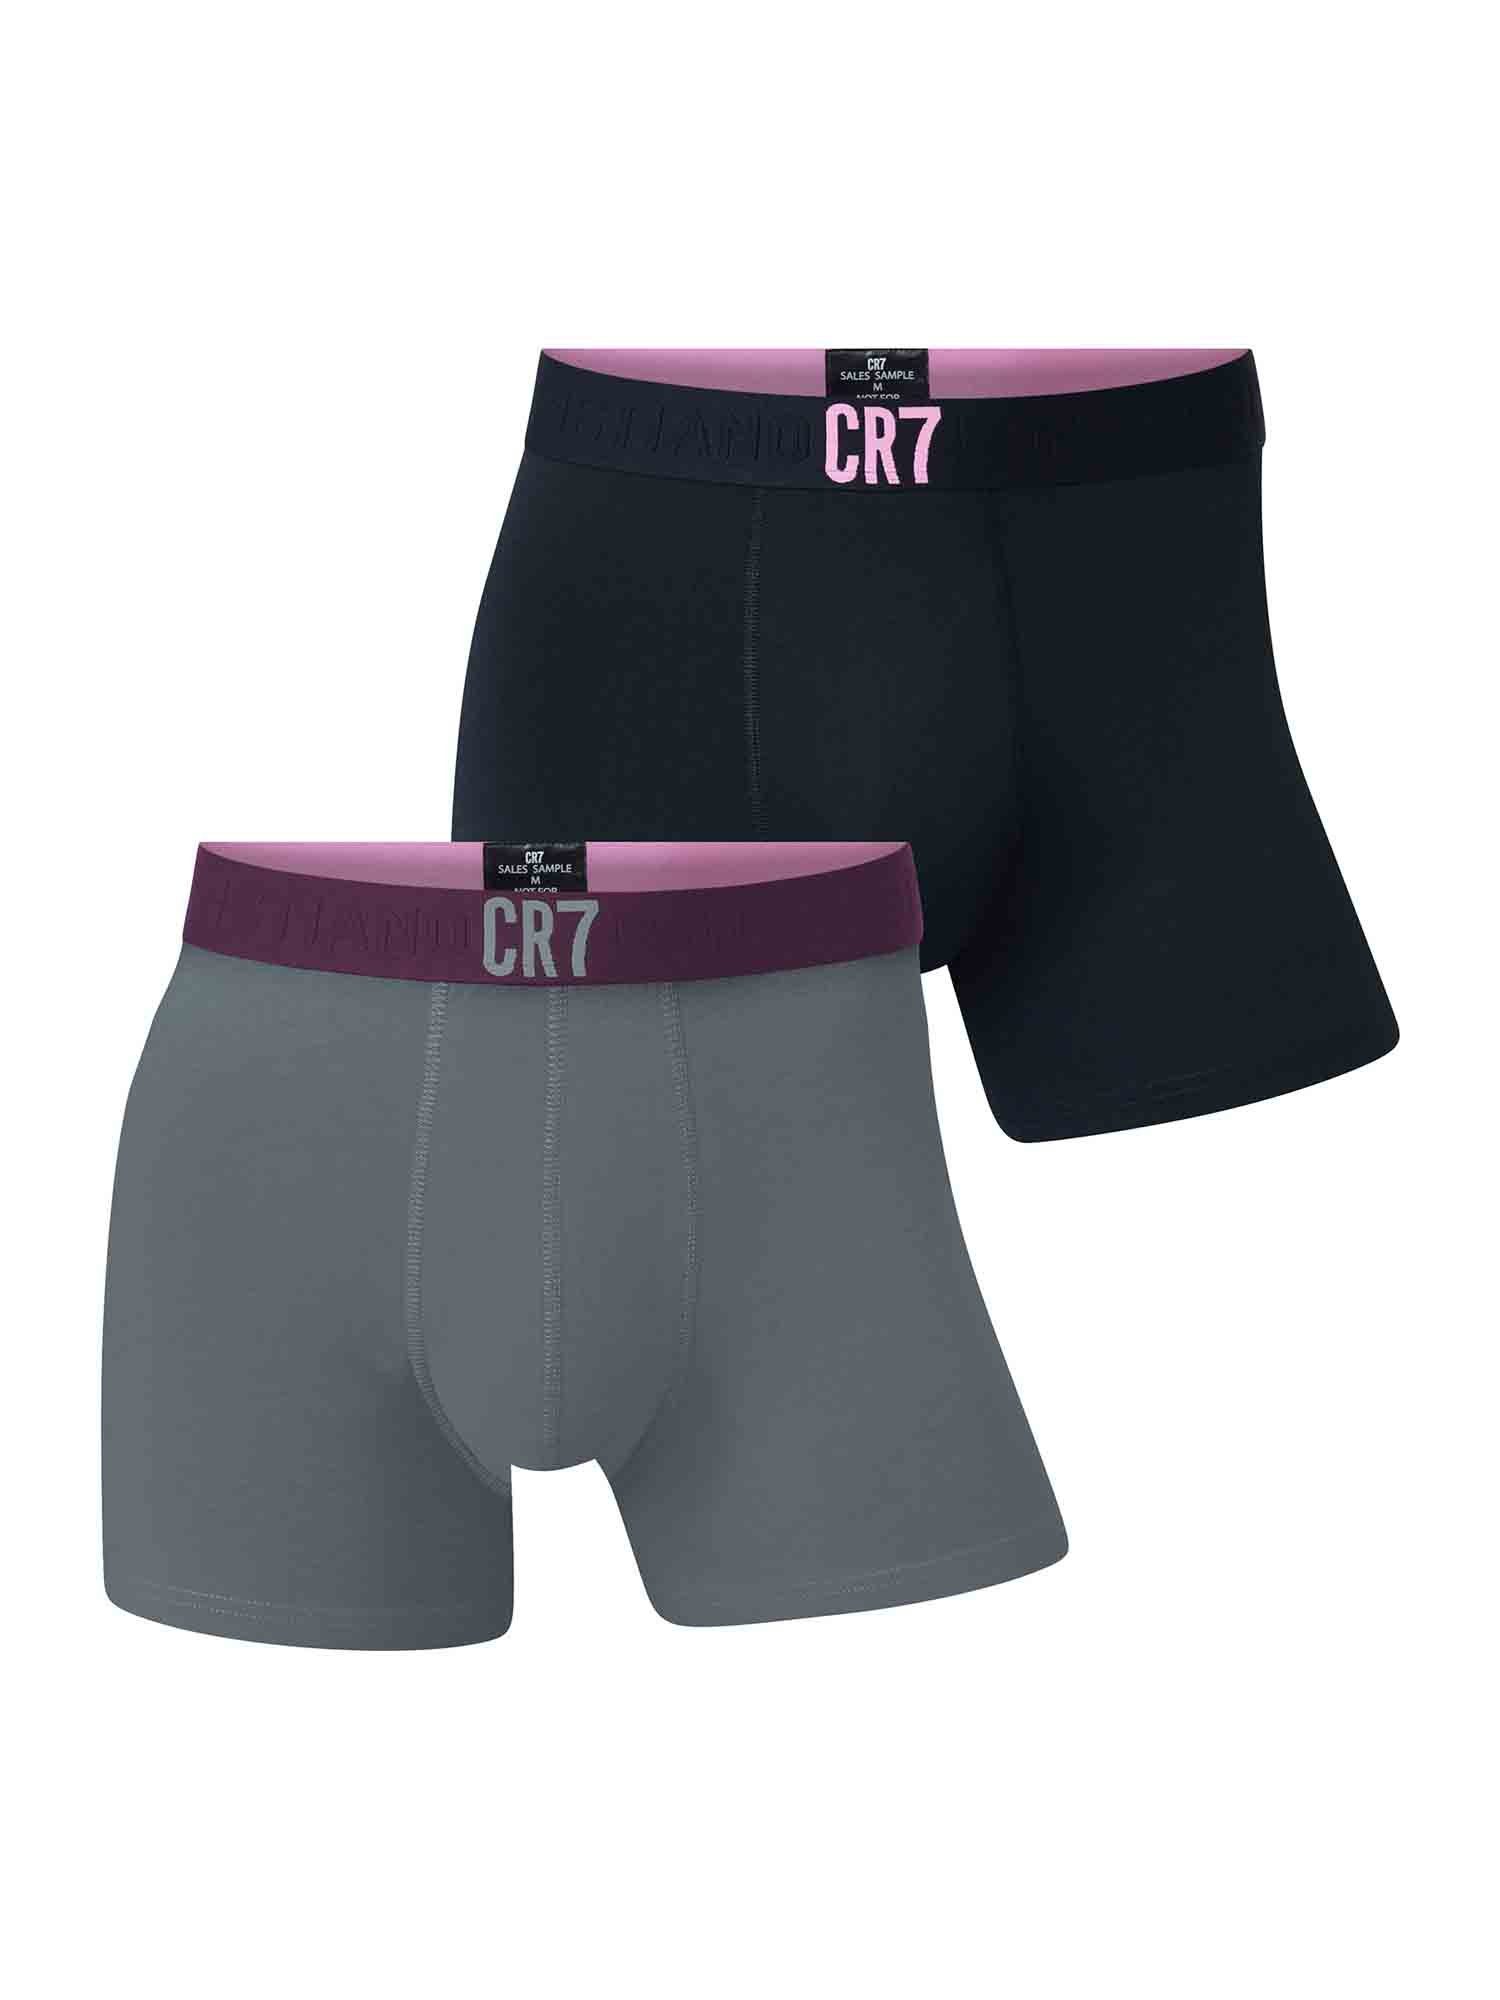 Multi CR7 Retro Pants Männer Trunks (2-St) Pants Multipack Boxershorts Retro Herren 35